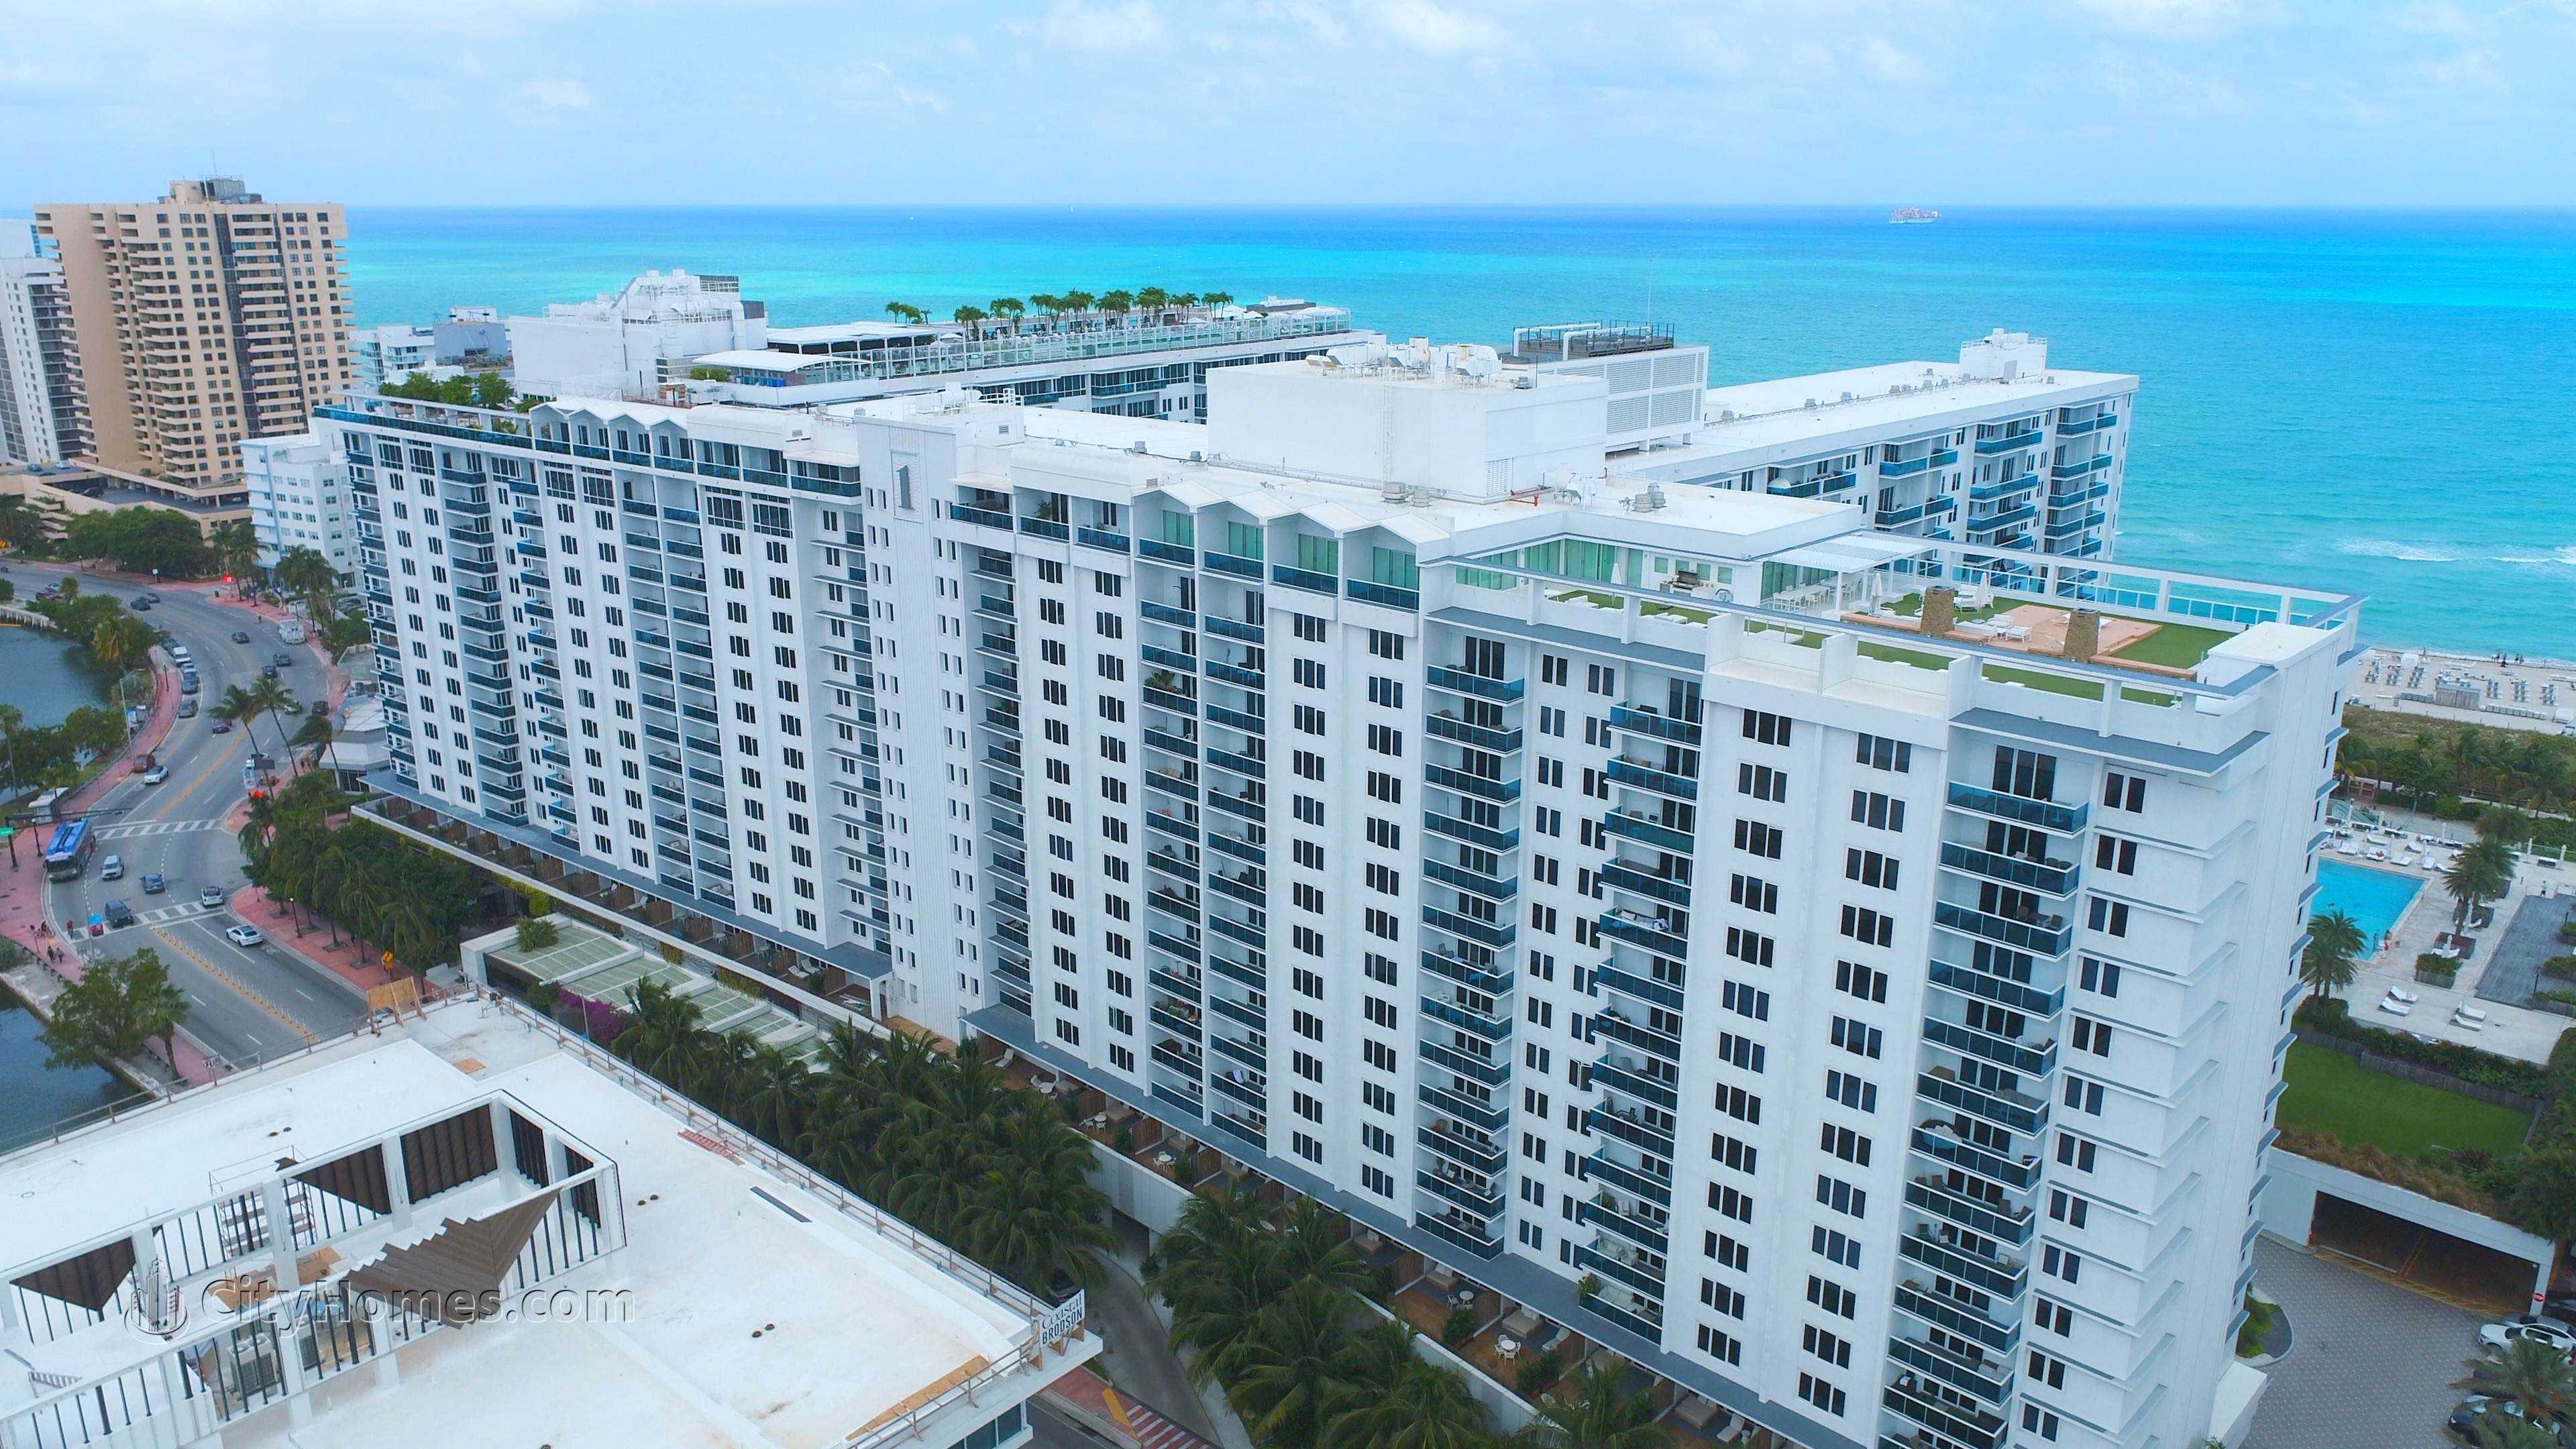 1 HOTEL & HOMES建于 102 24th Street, Mid Beach, 迈阿密海滩, FL 33139